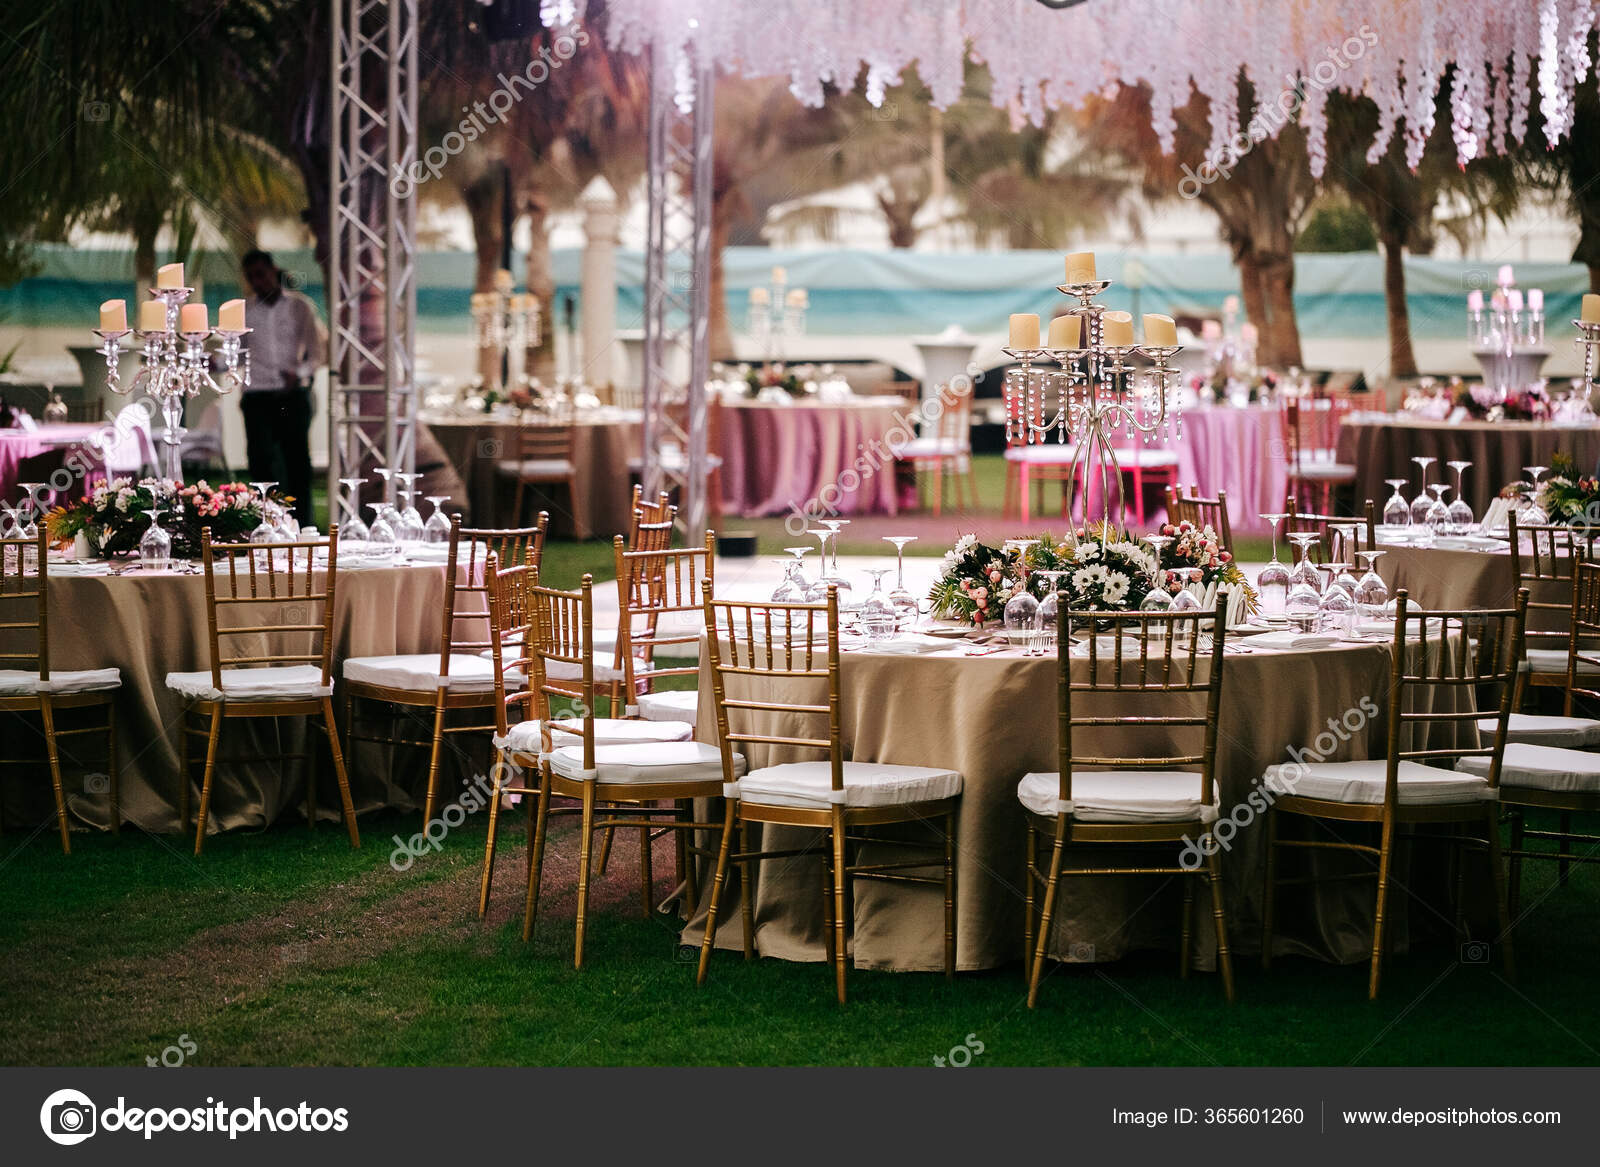 https://st3.depositphotos.com/2892873/36560/i/1600/depositphotos_365601260-stock-photo-international-wedding-outdoor-celebration-evening.jpg